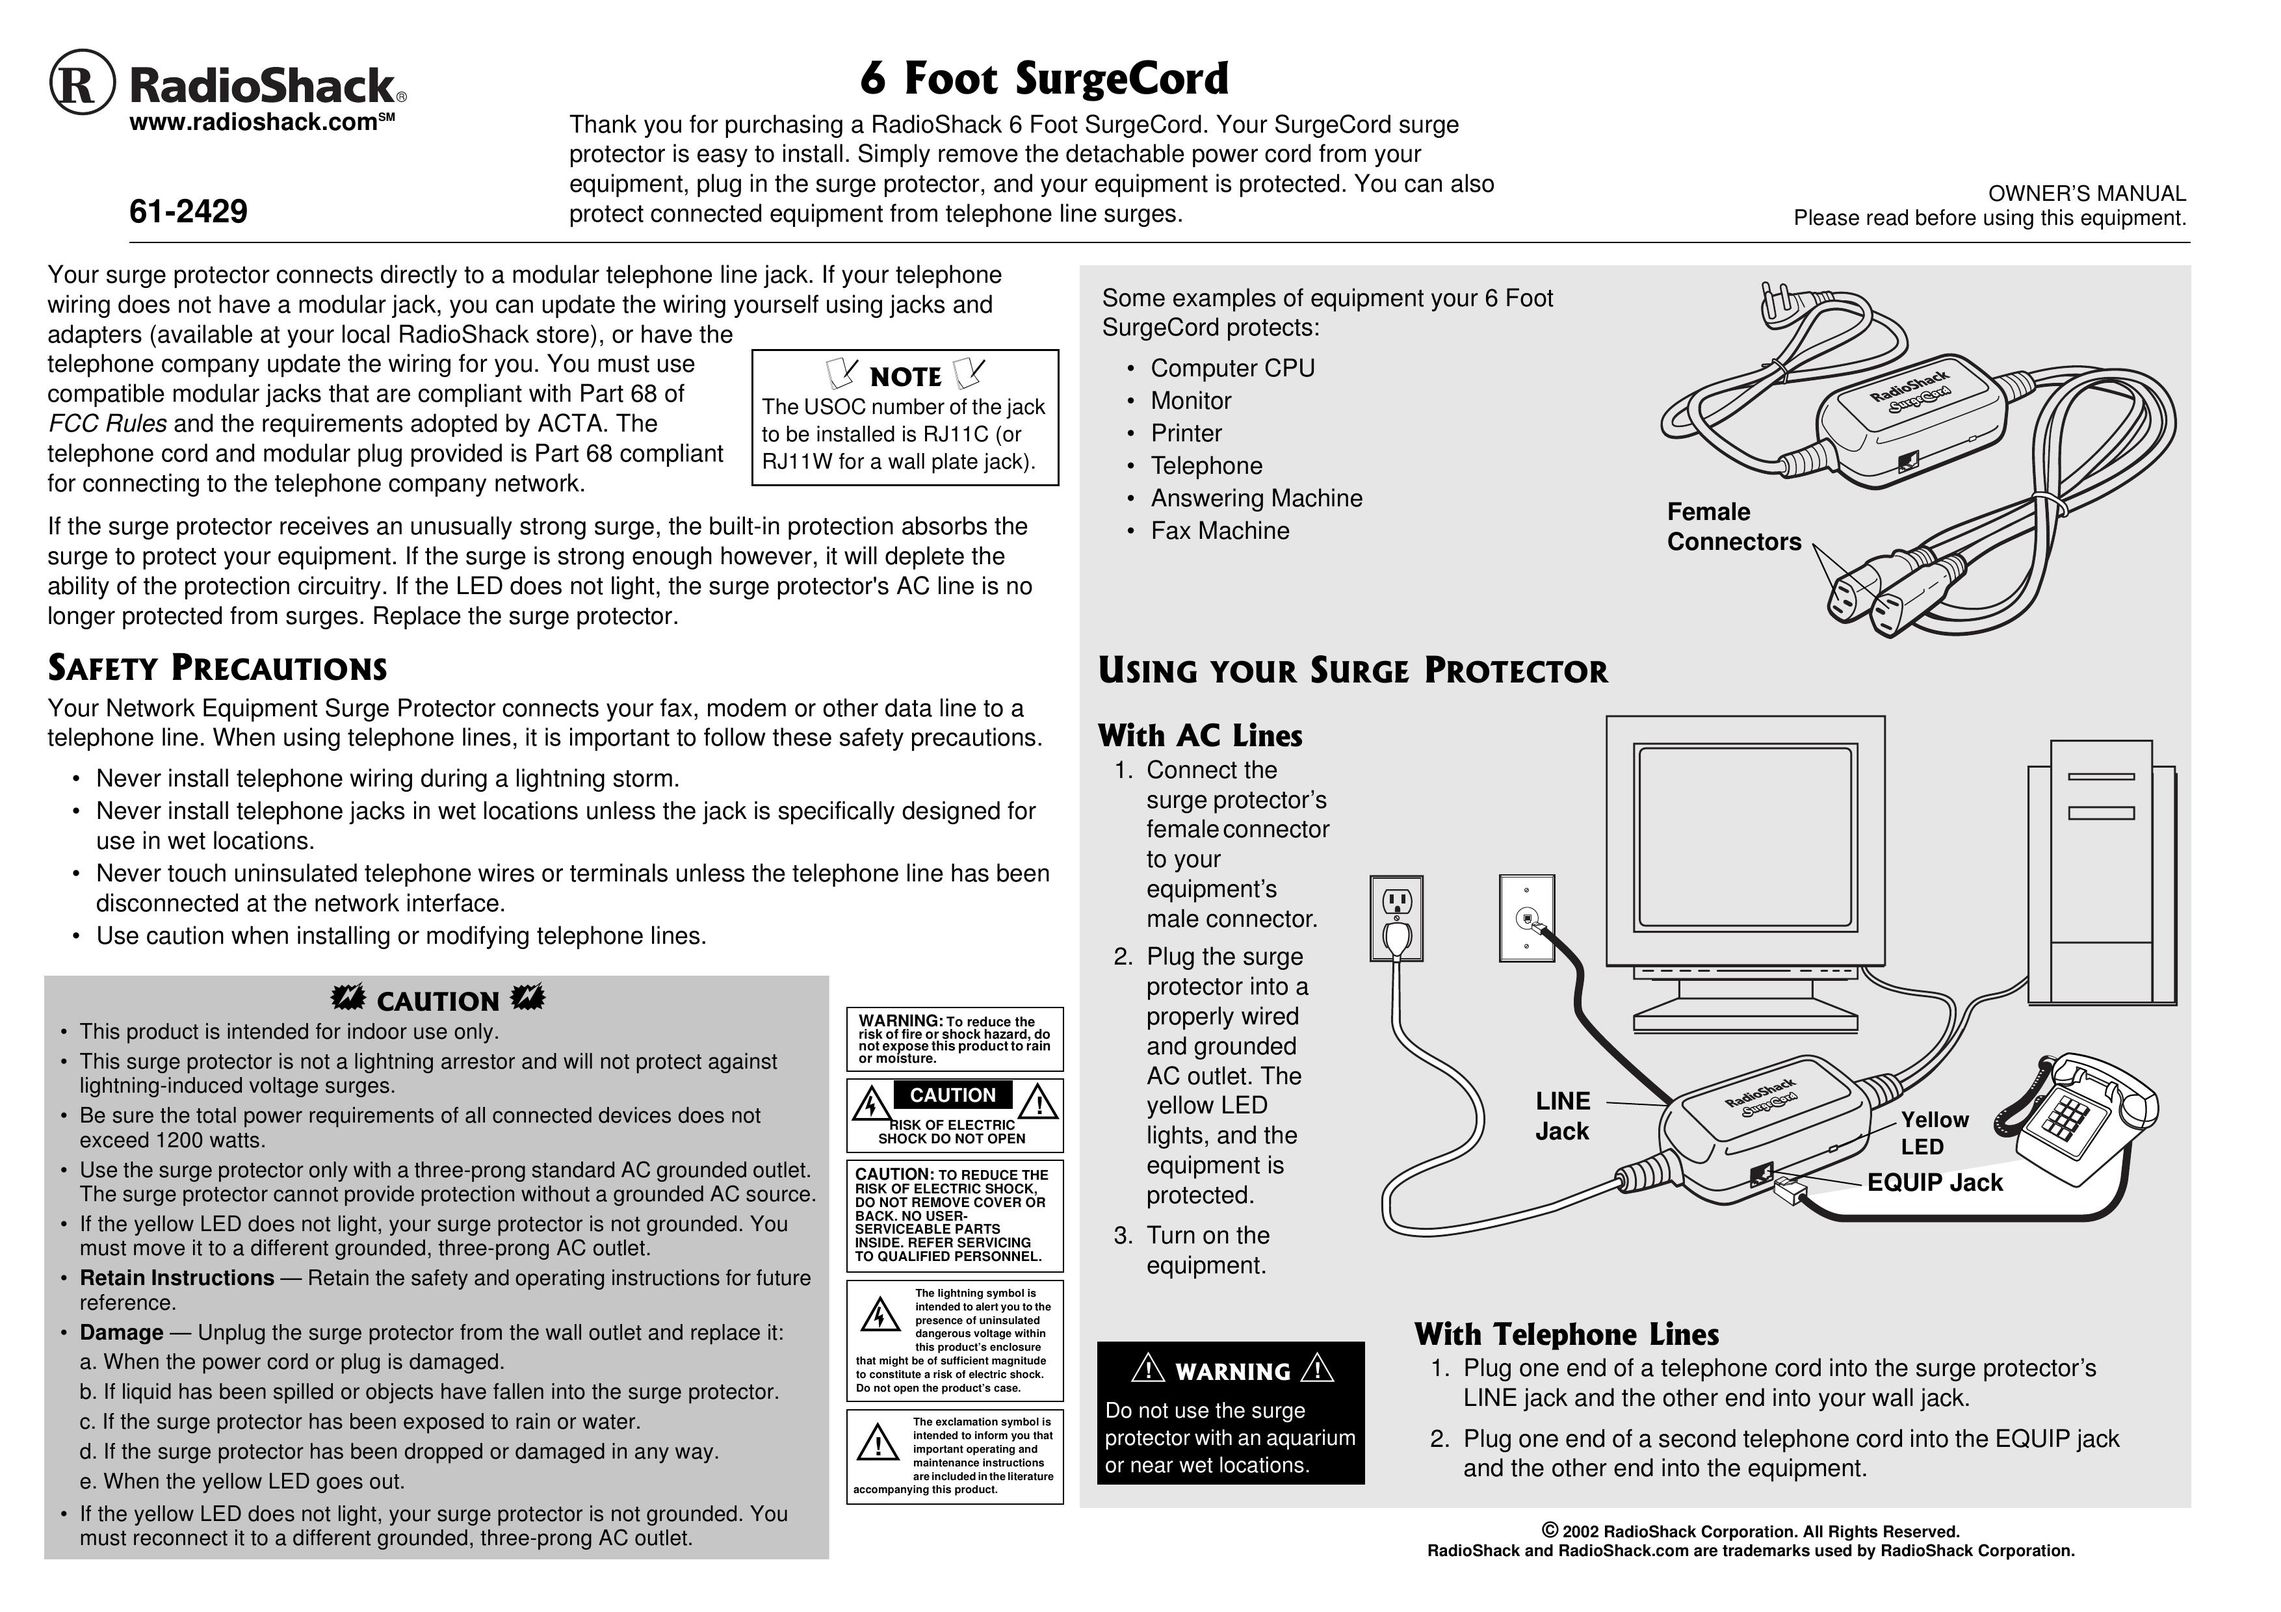 Radio Shack 61-2429 Surge Protector User Manual